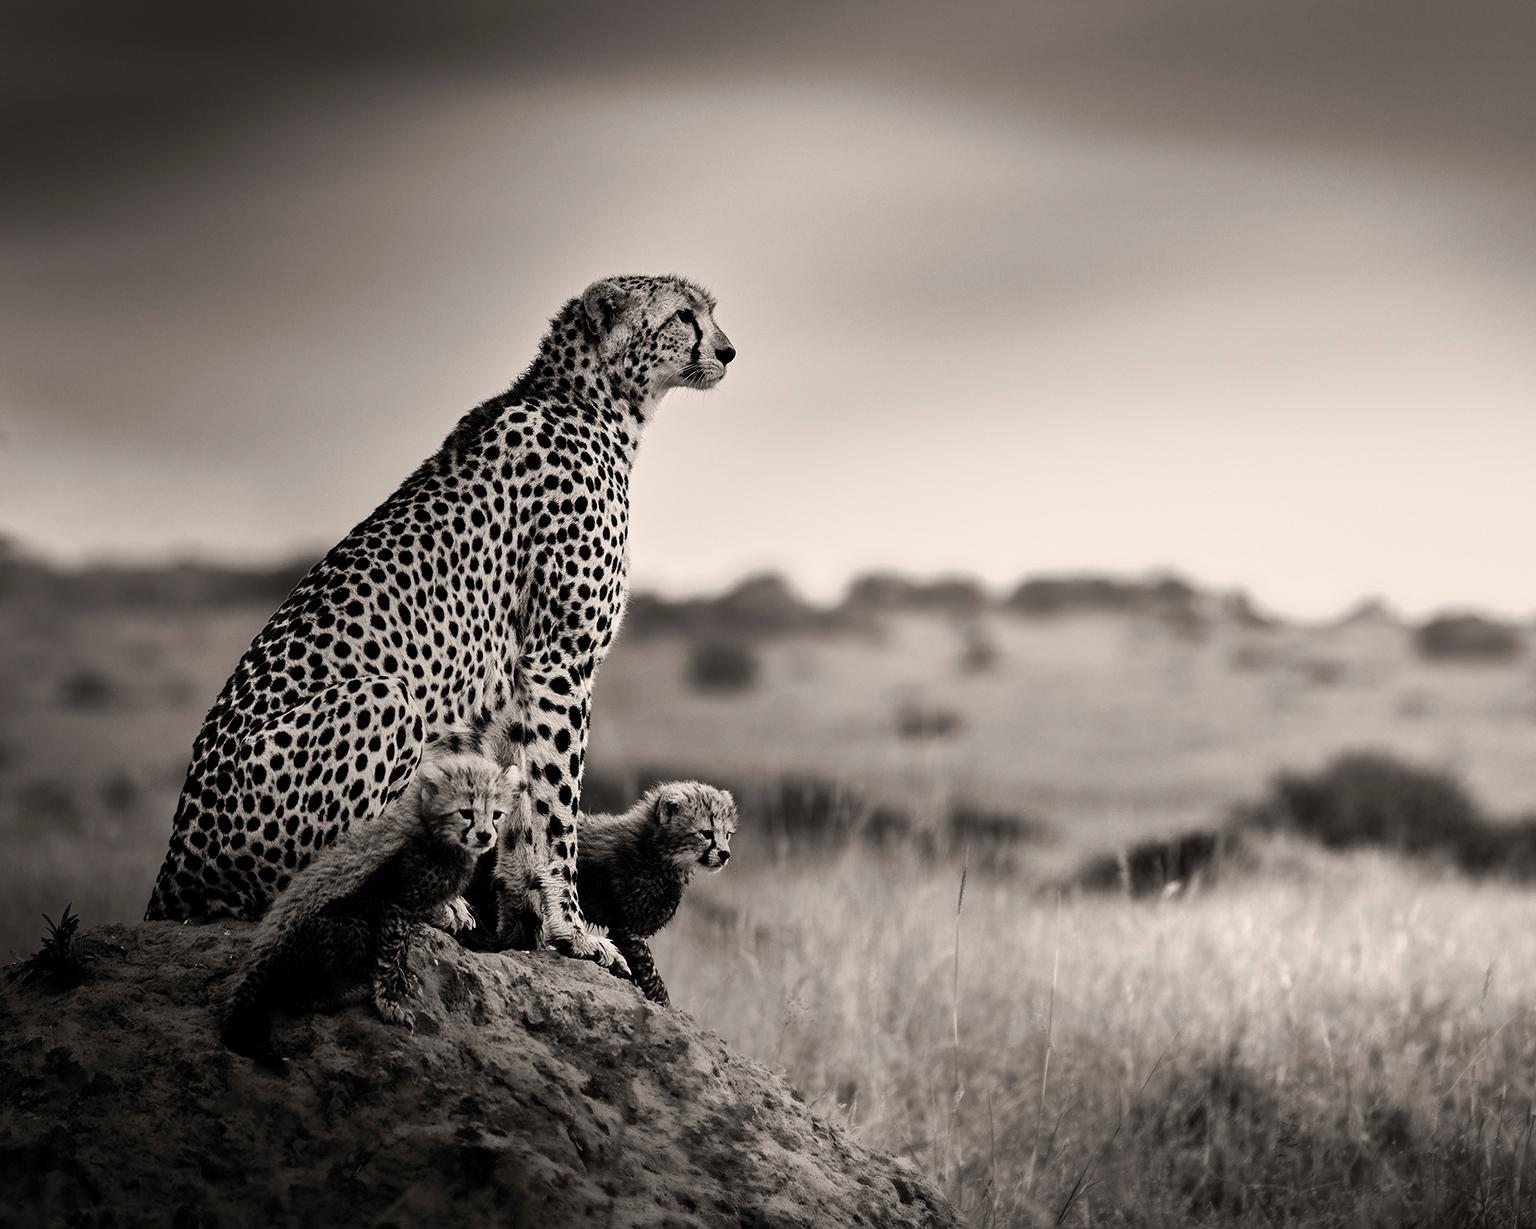 Joachim Schmeisser Portrait Photograph - Cheetah with babies, blackandhwite photography, Africa, Portrait, Wildlife